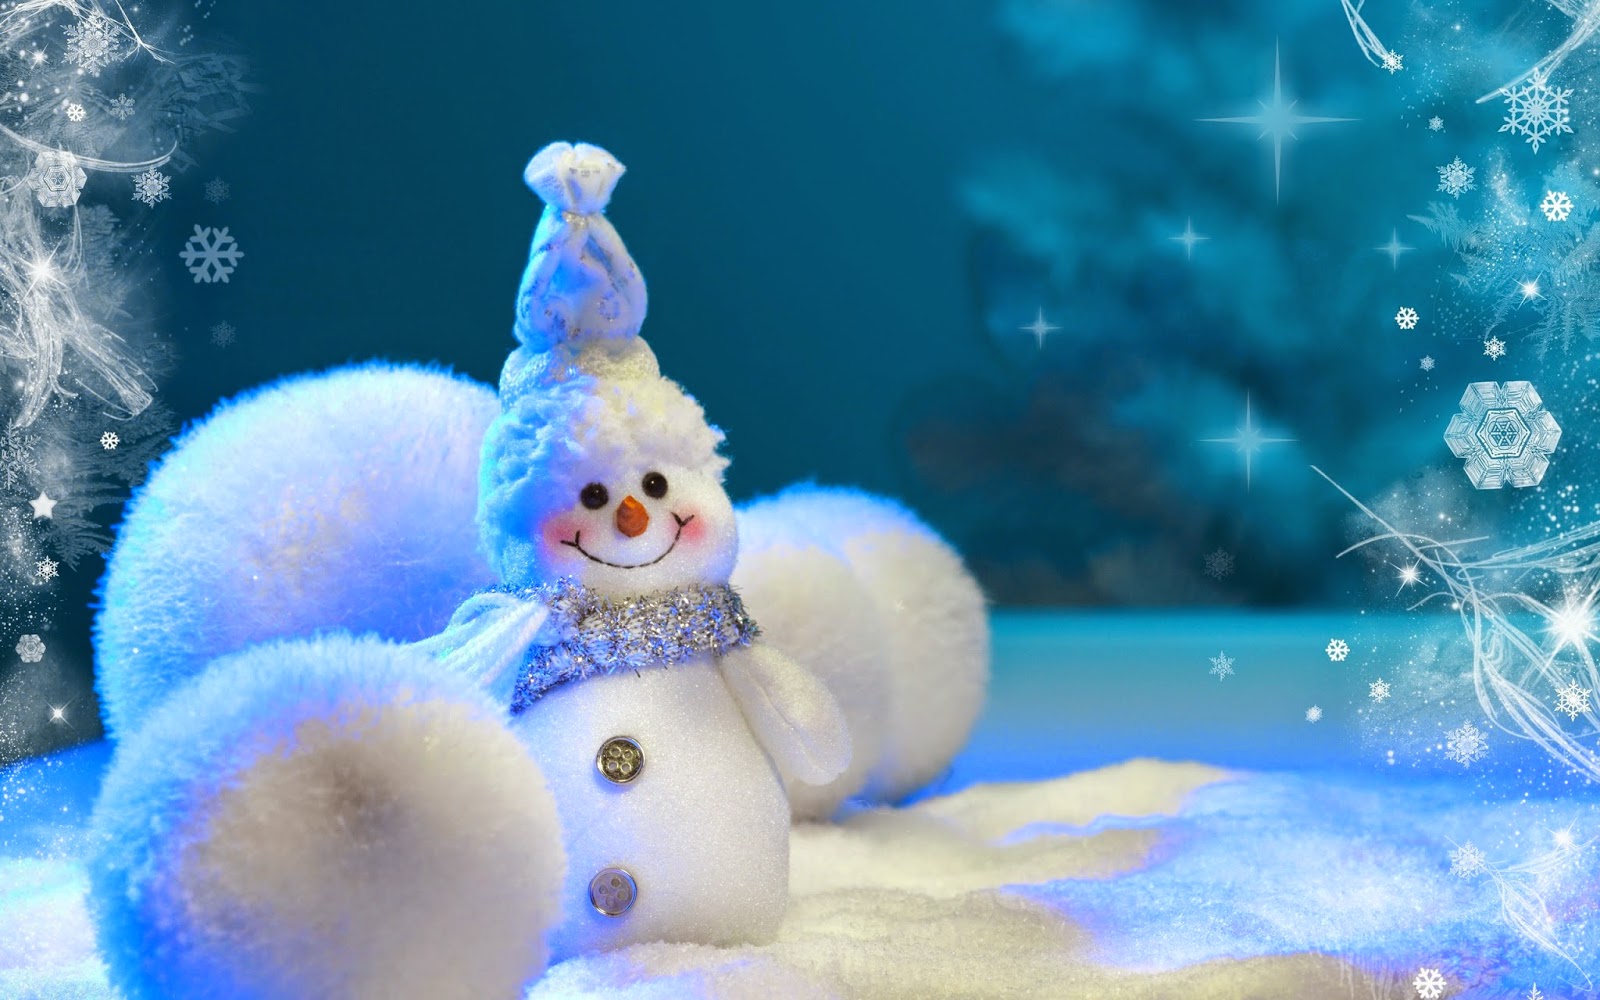 Cute Christmas Snowman Image Real Dress Decorations Ideas